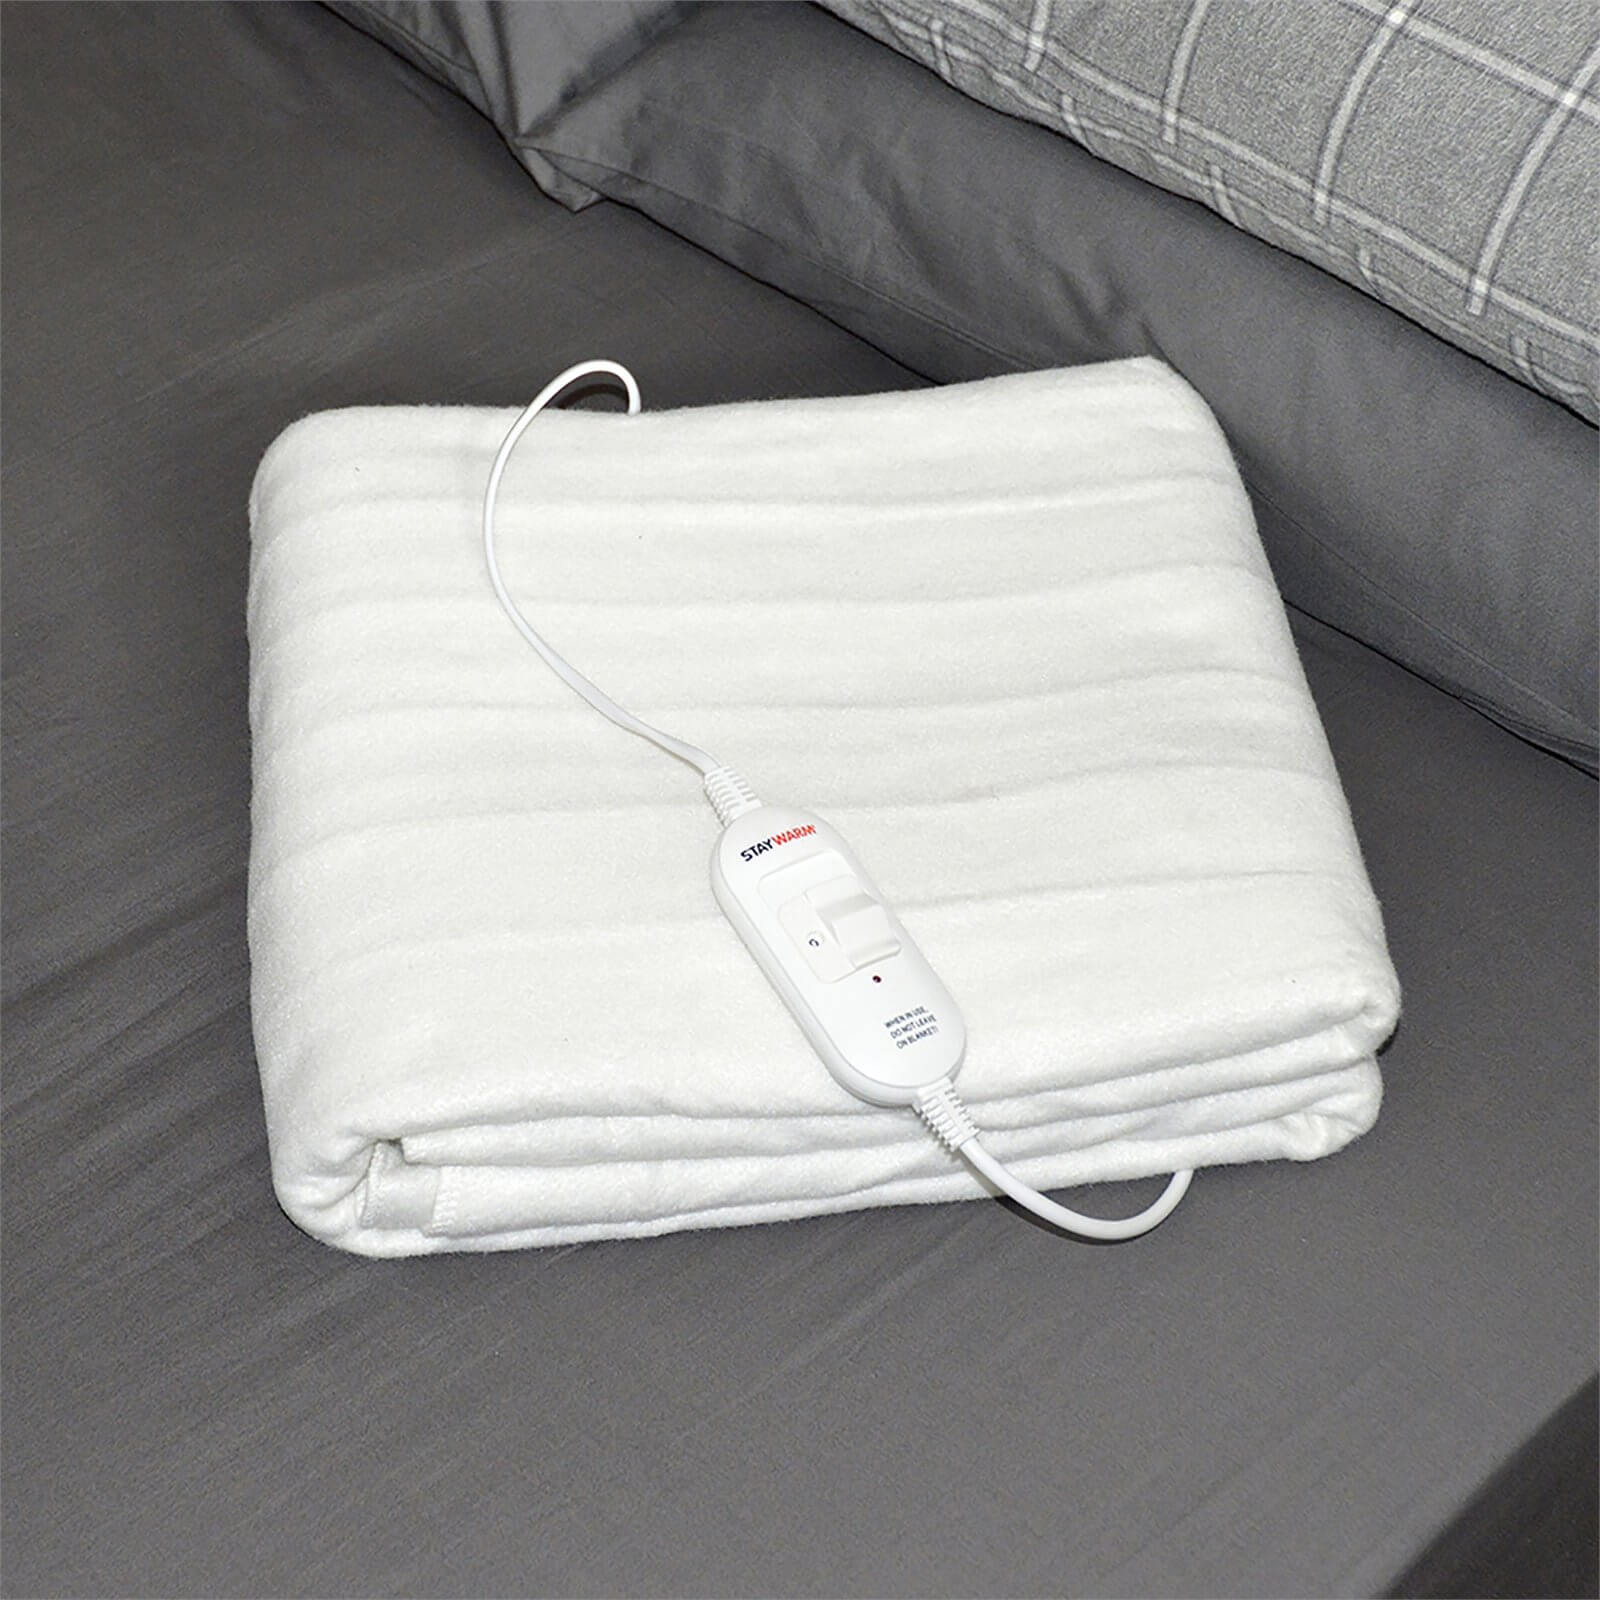 StayWarm Luxury Electric Blanket - Double